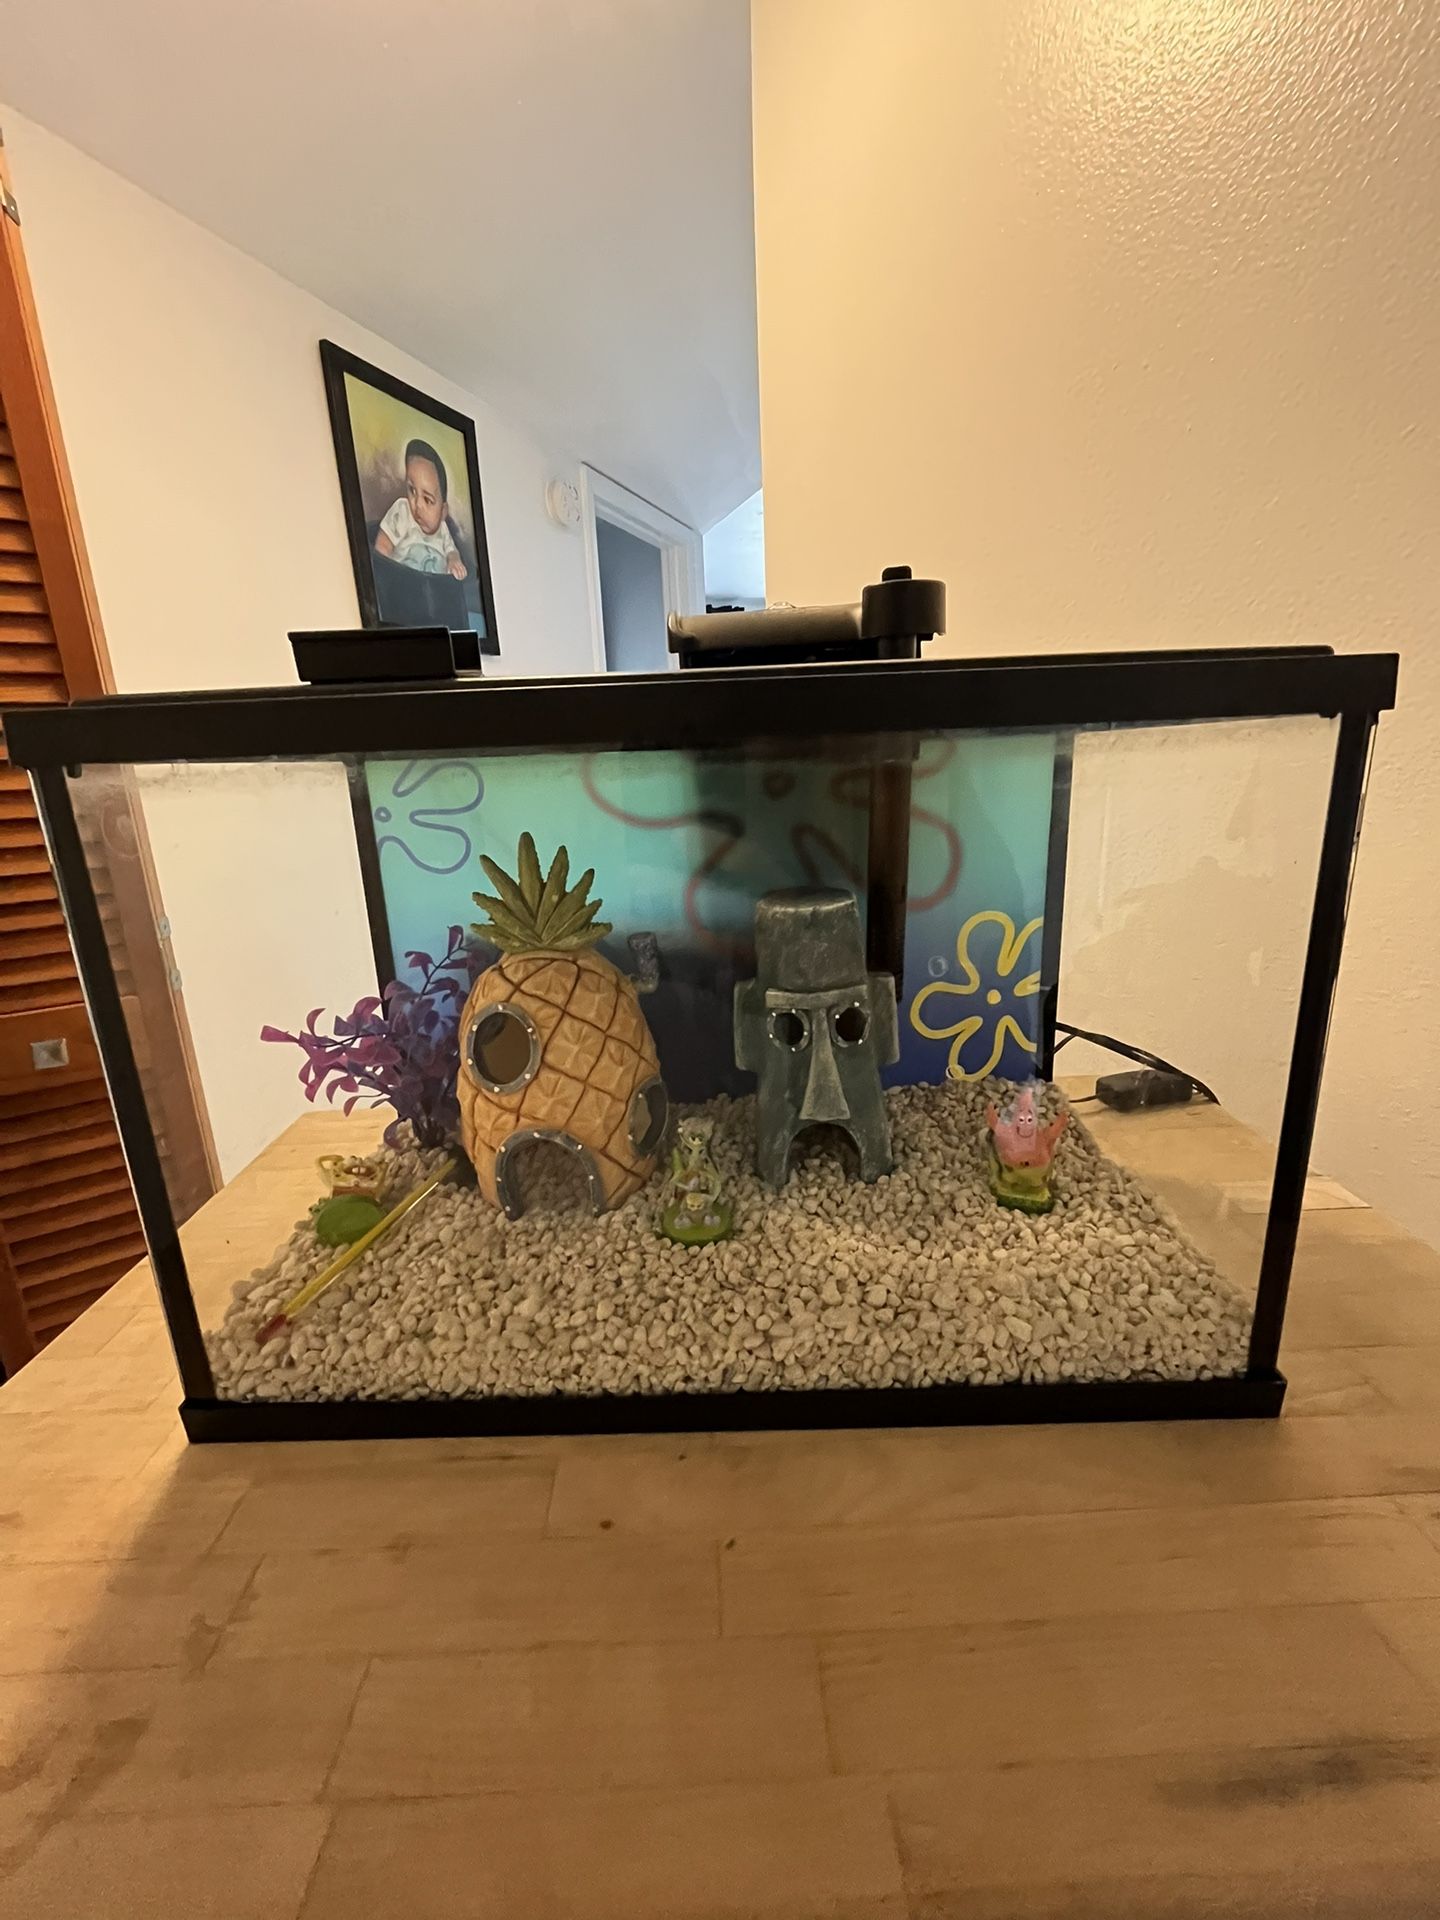 Sponge Bob Themed Fish Tank $80